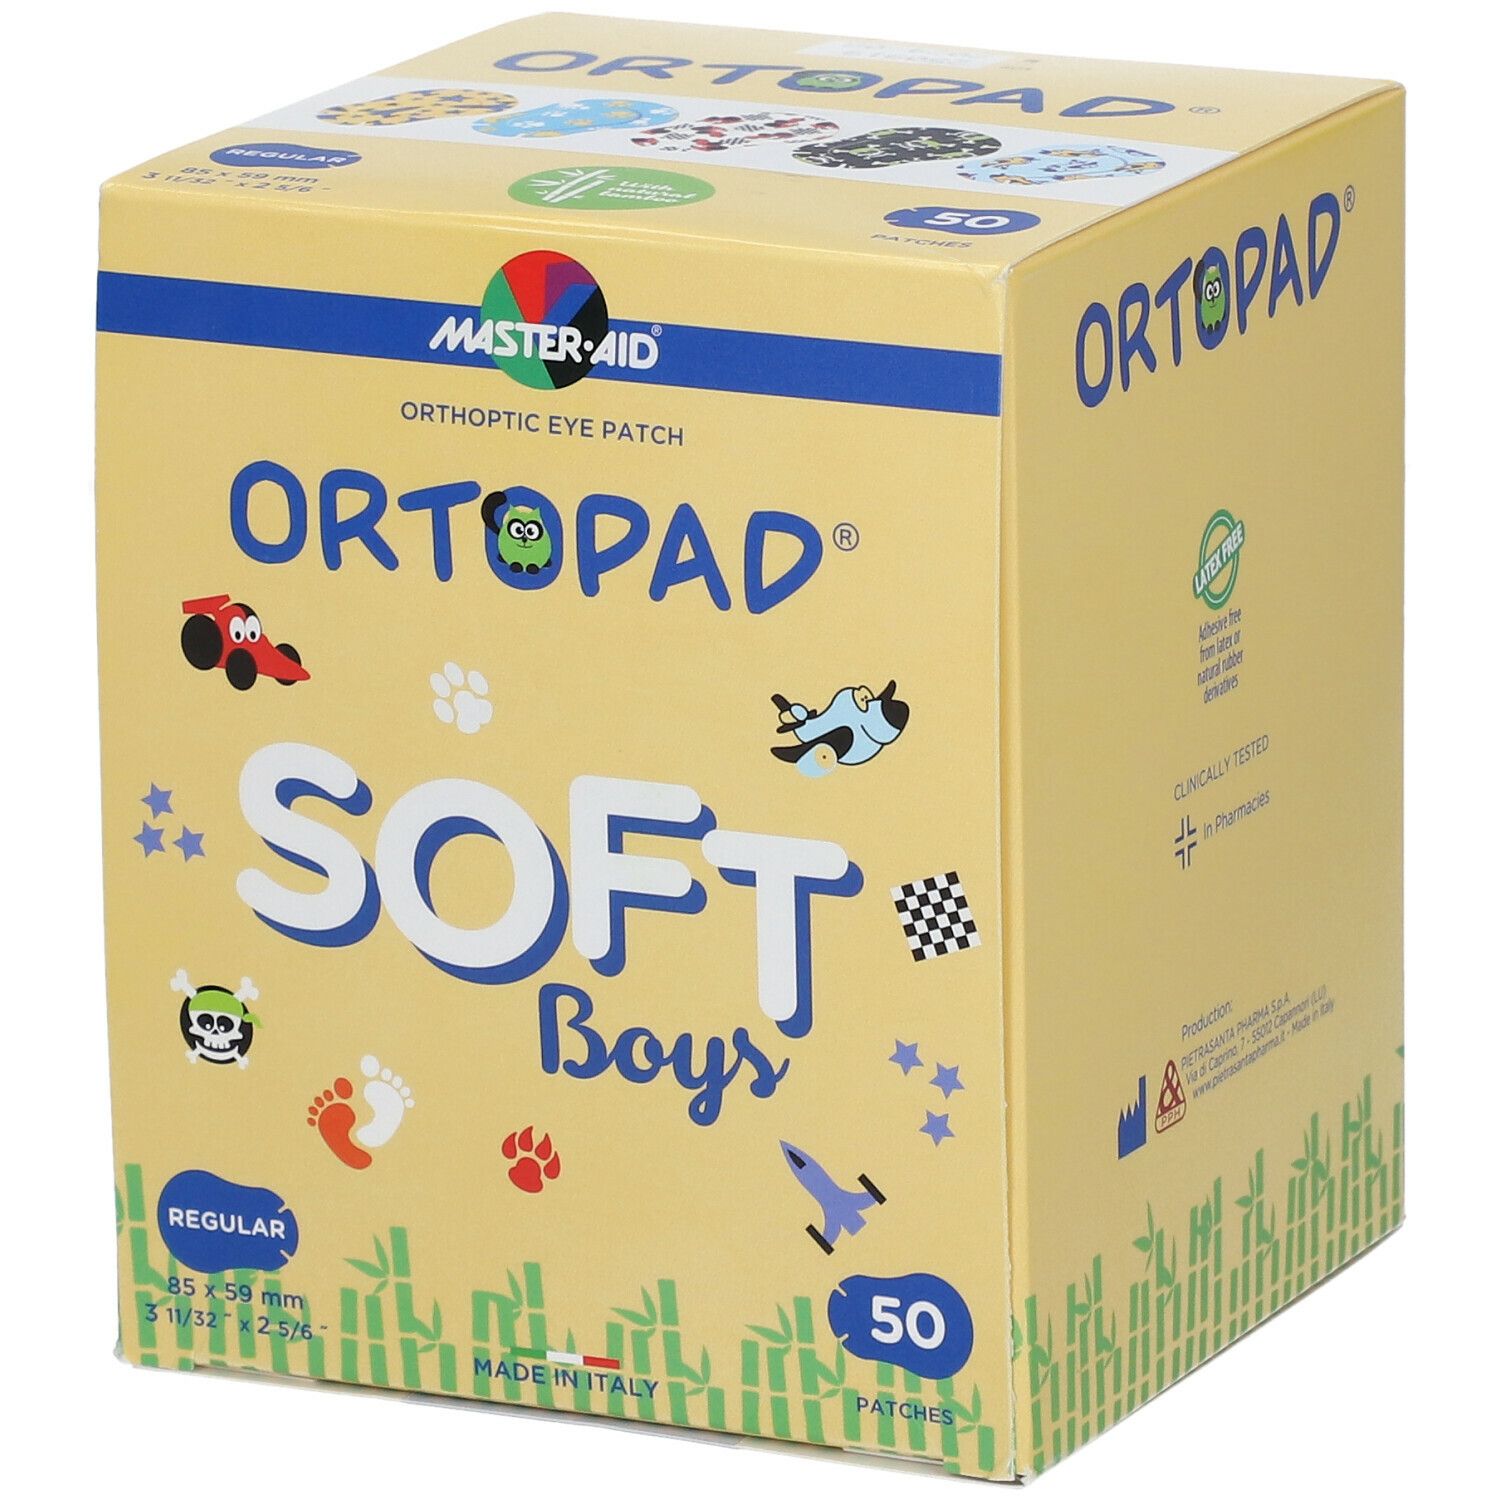 Ortopad® Soft Boys Regular 85 x 59 mm